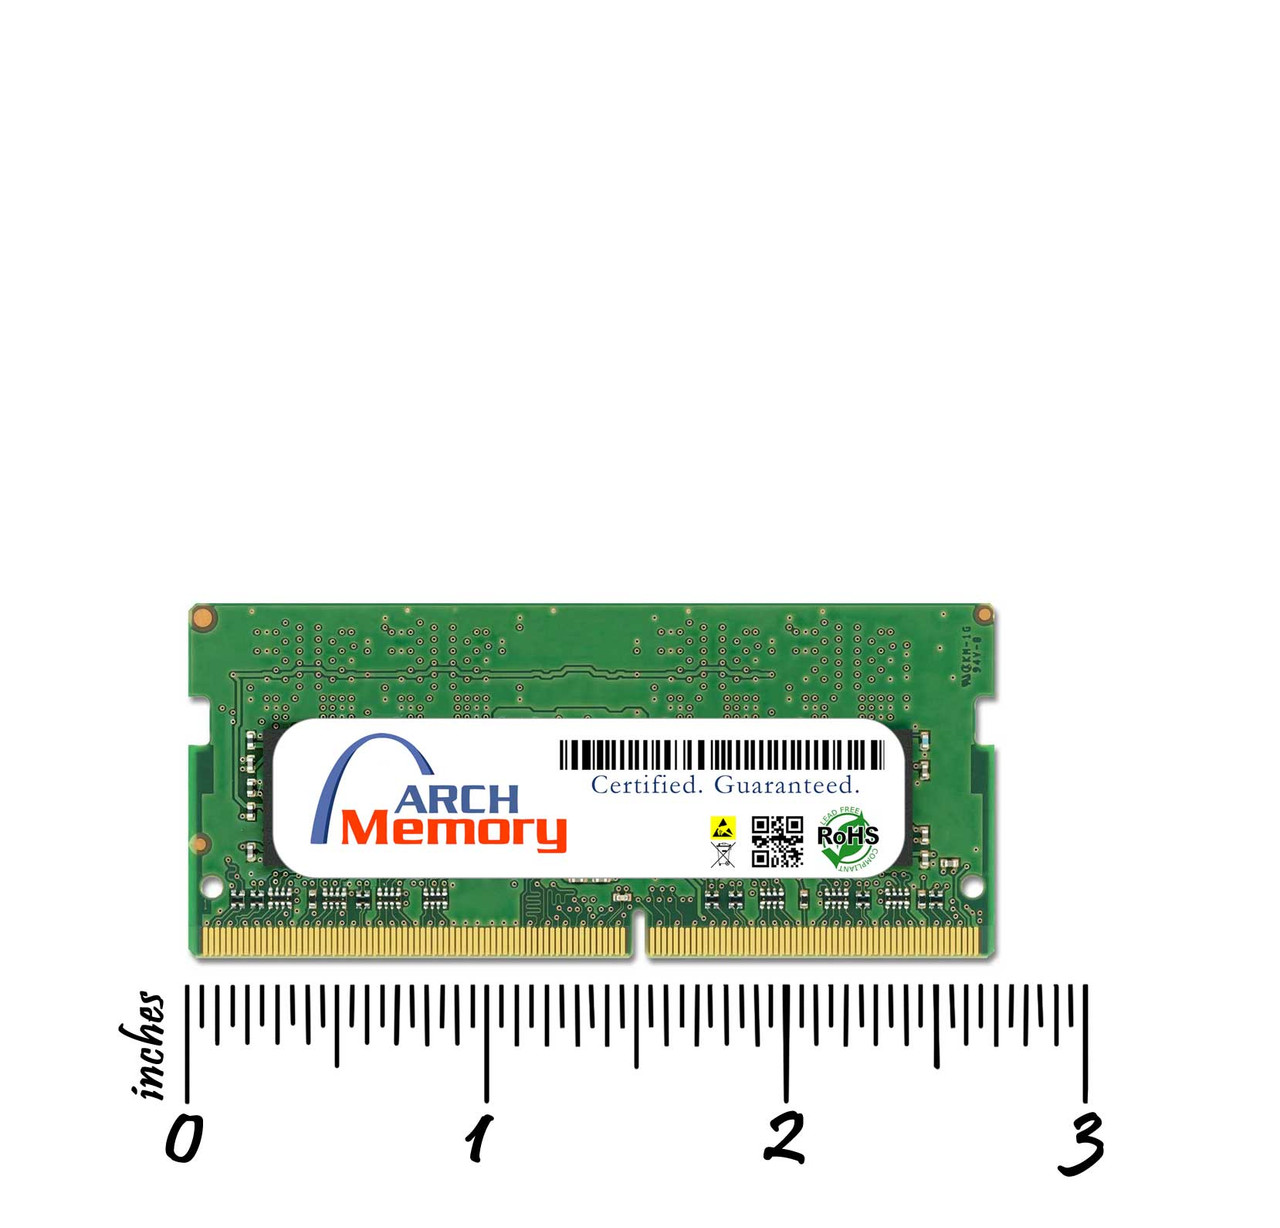 8GB Memory Dell Inspiron 17 (5765) DDR4 RAM Upgrade Upgrade* D8GB2400SOr1b8-MG020